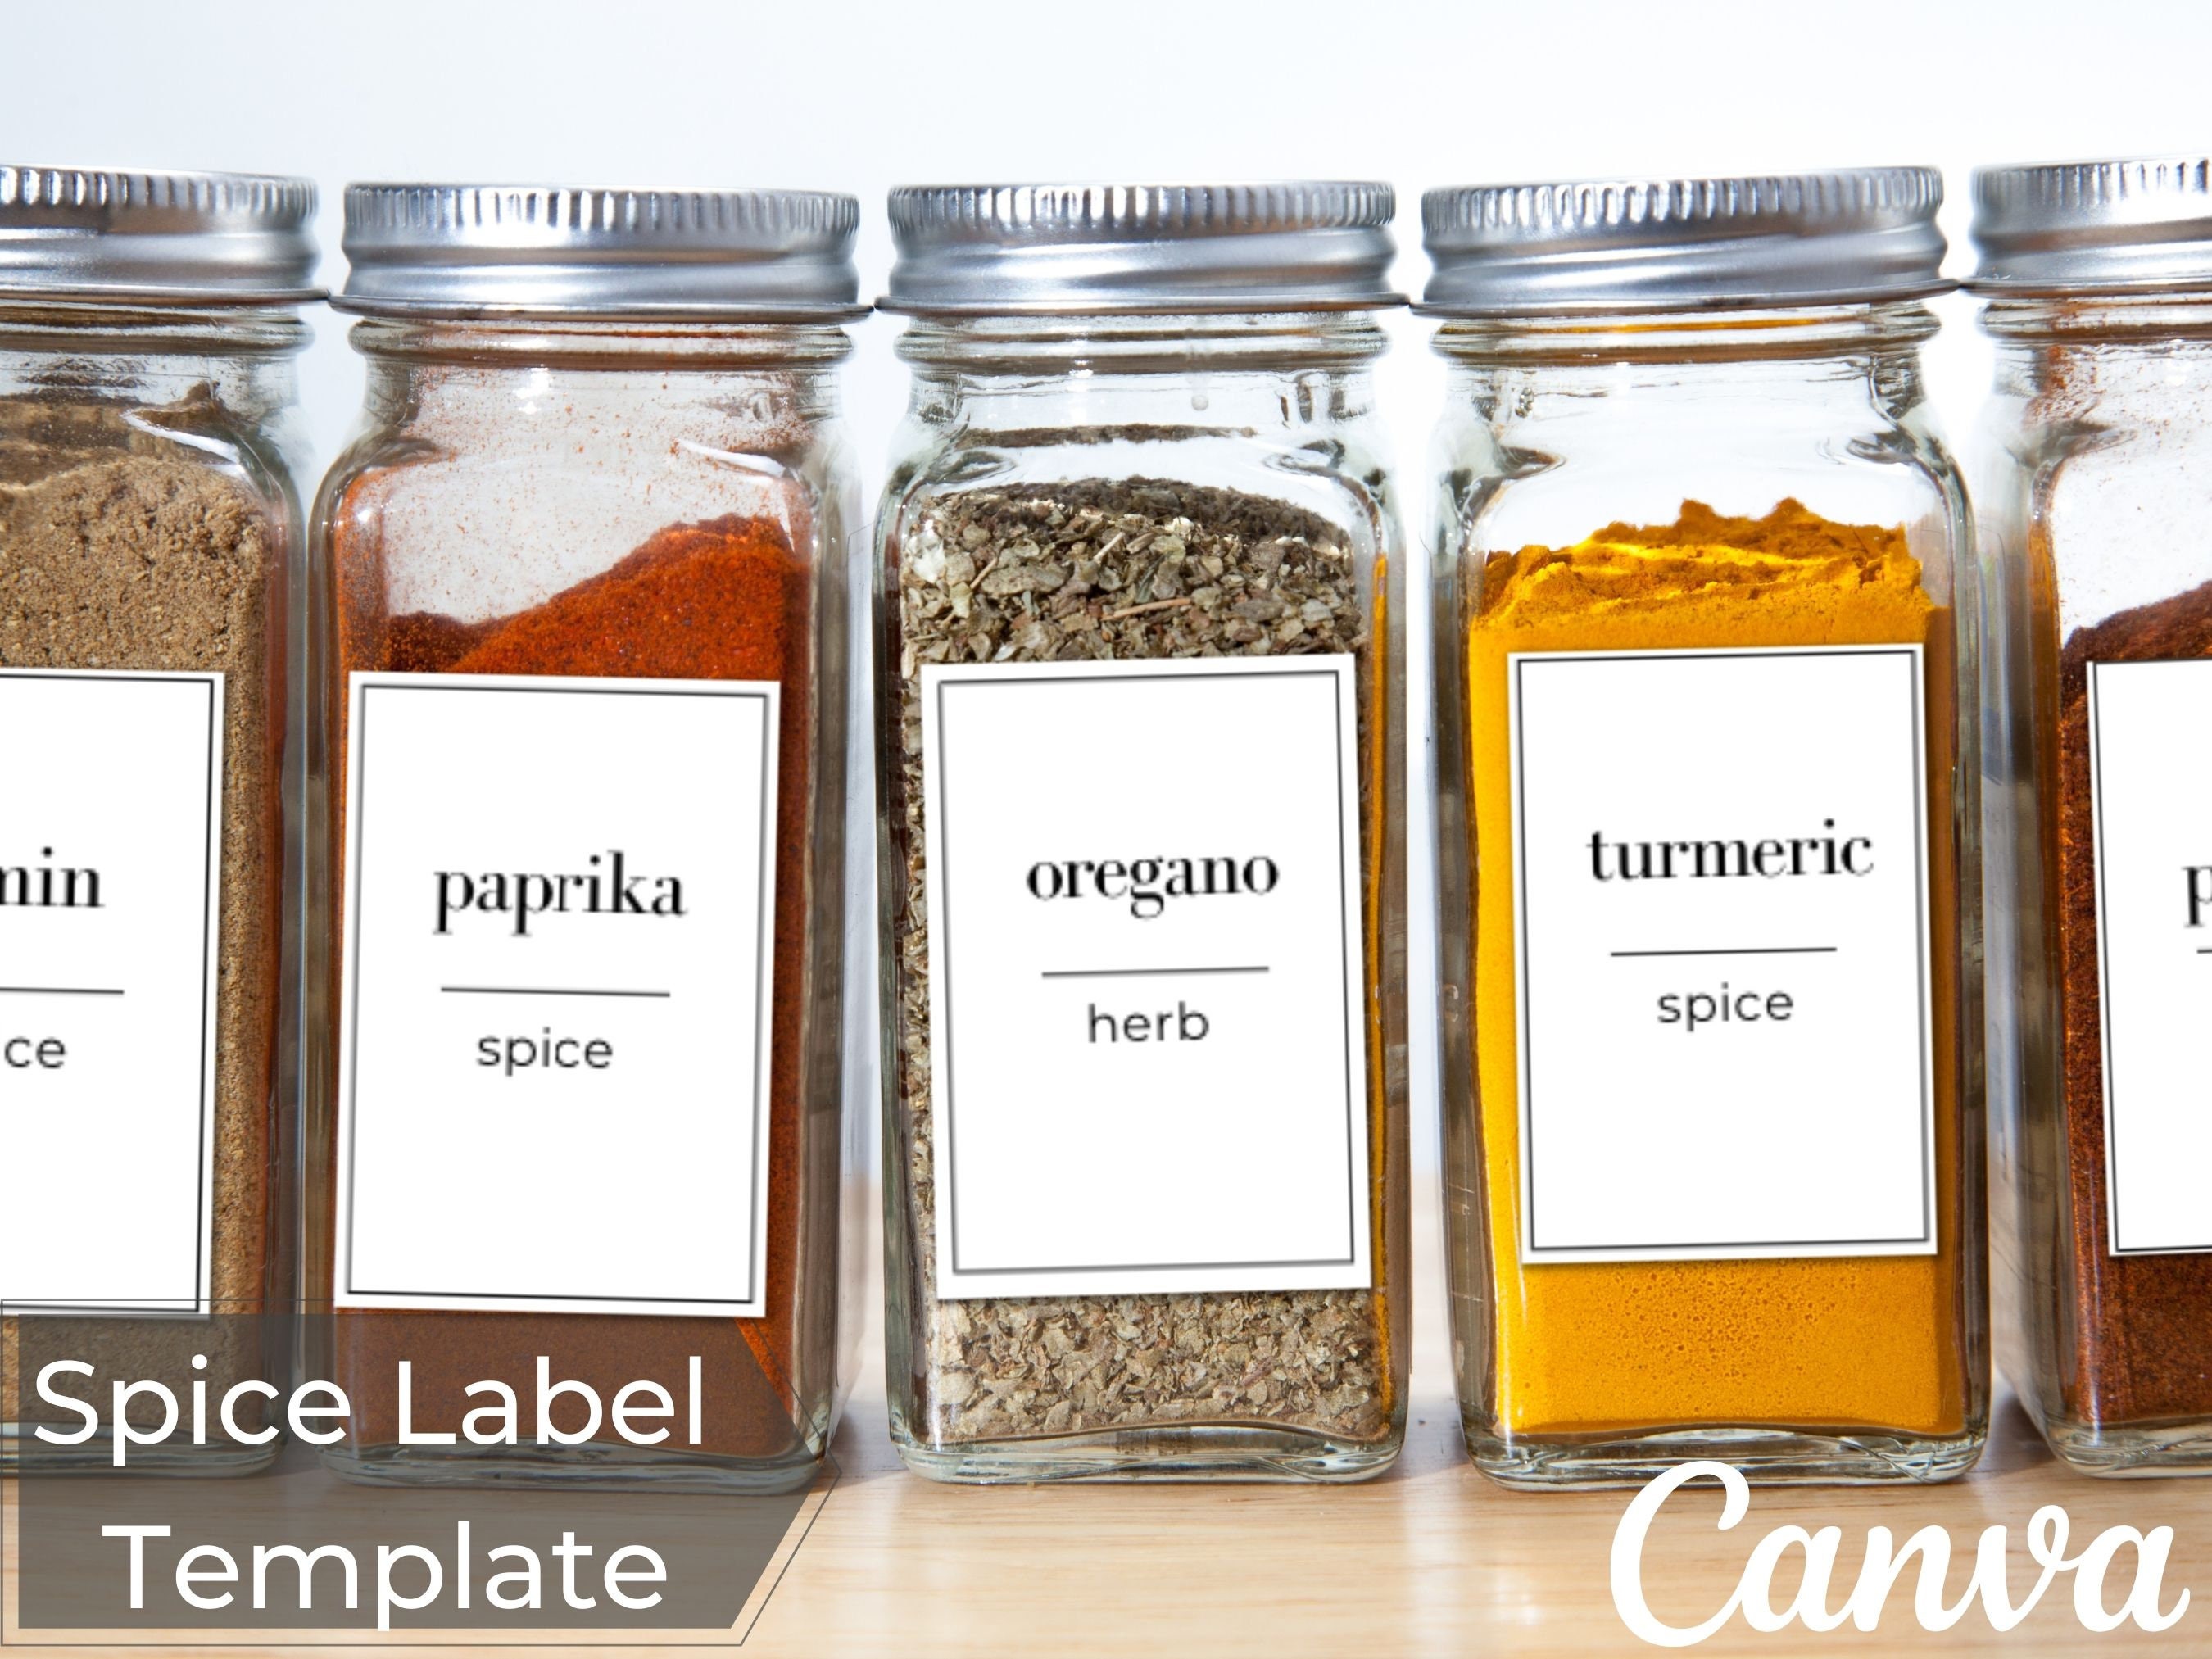 Bathroom Labels / Bathroom Label/ Labels / Canva Labels Template /  Printable Labels /custom Labels / Home Organization / Labels Template 